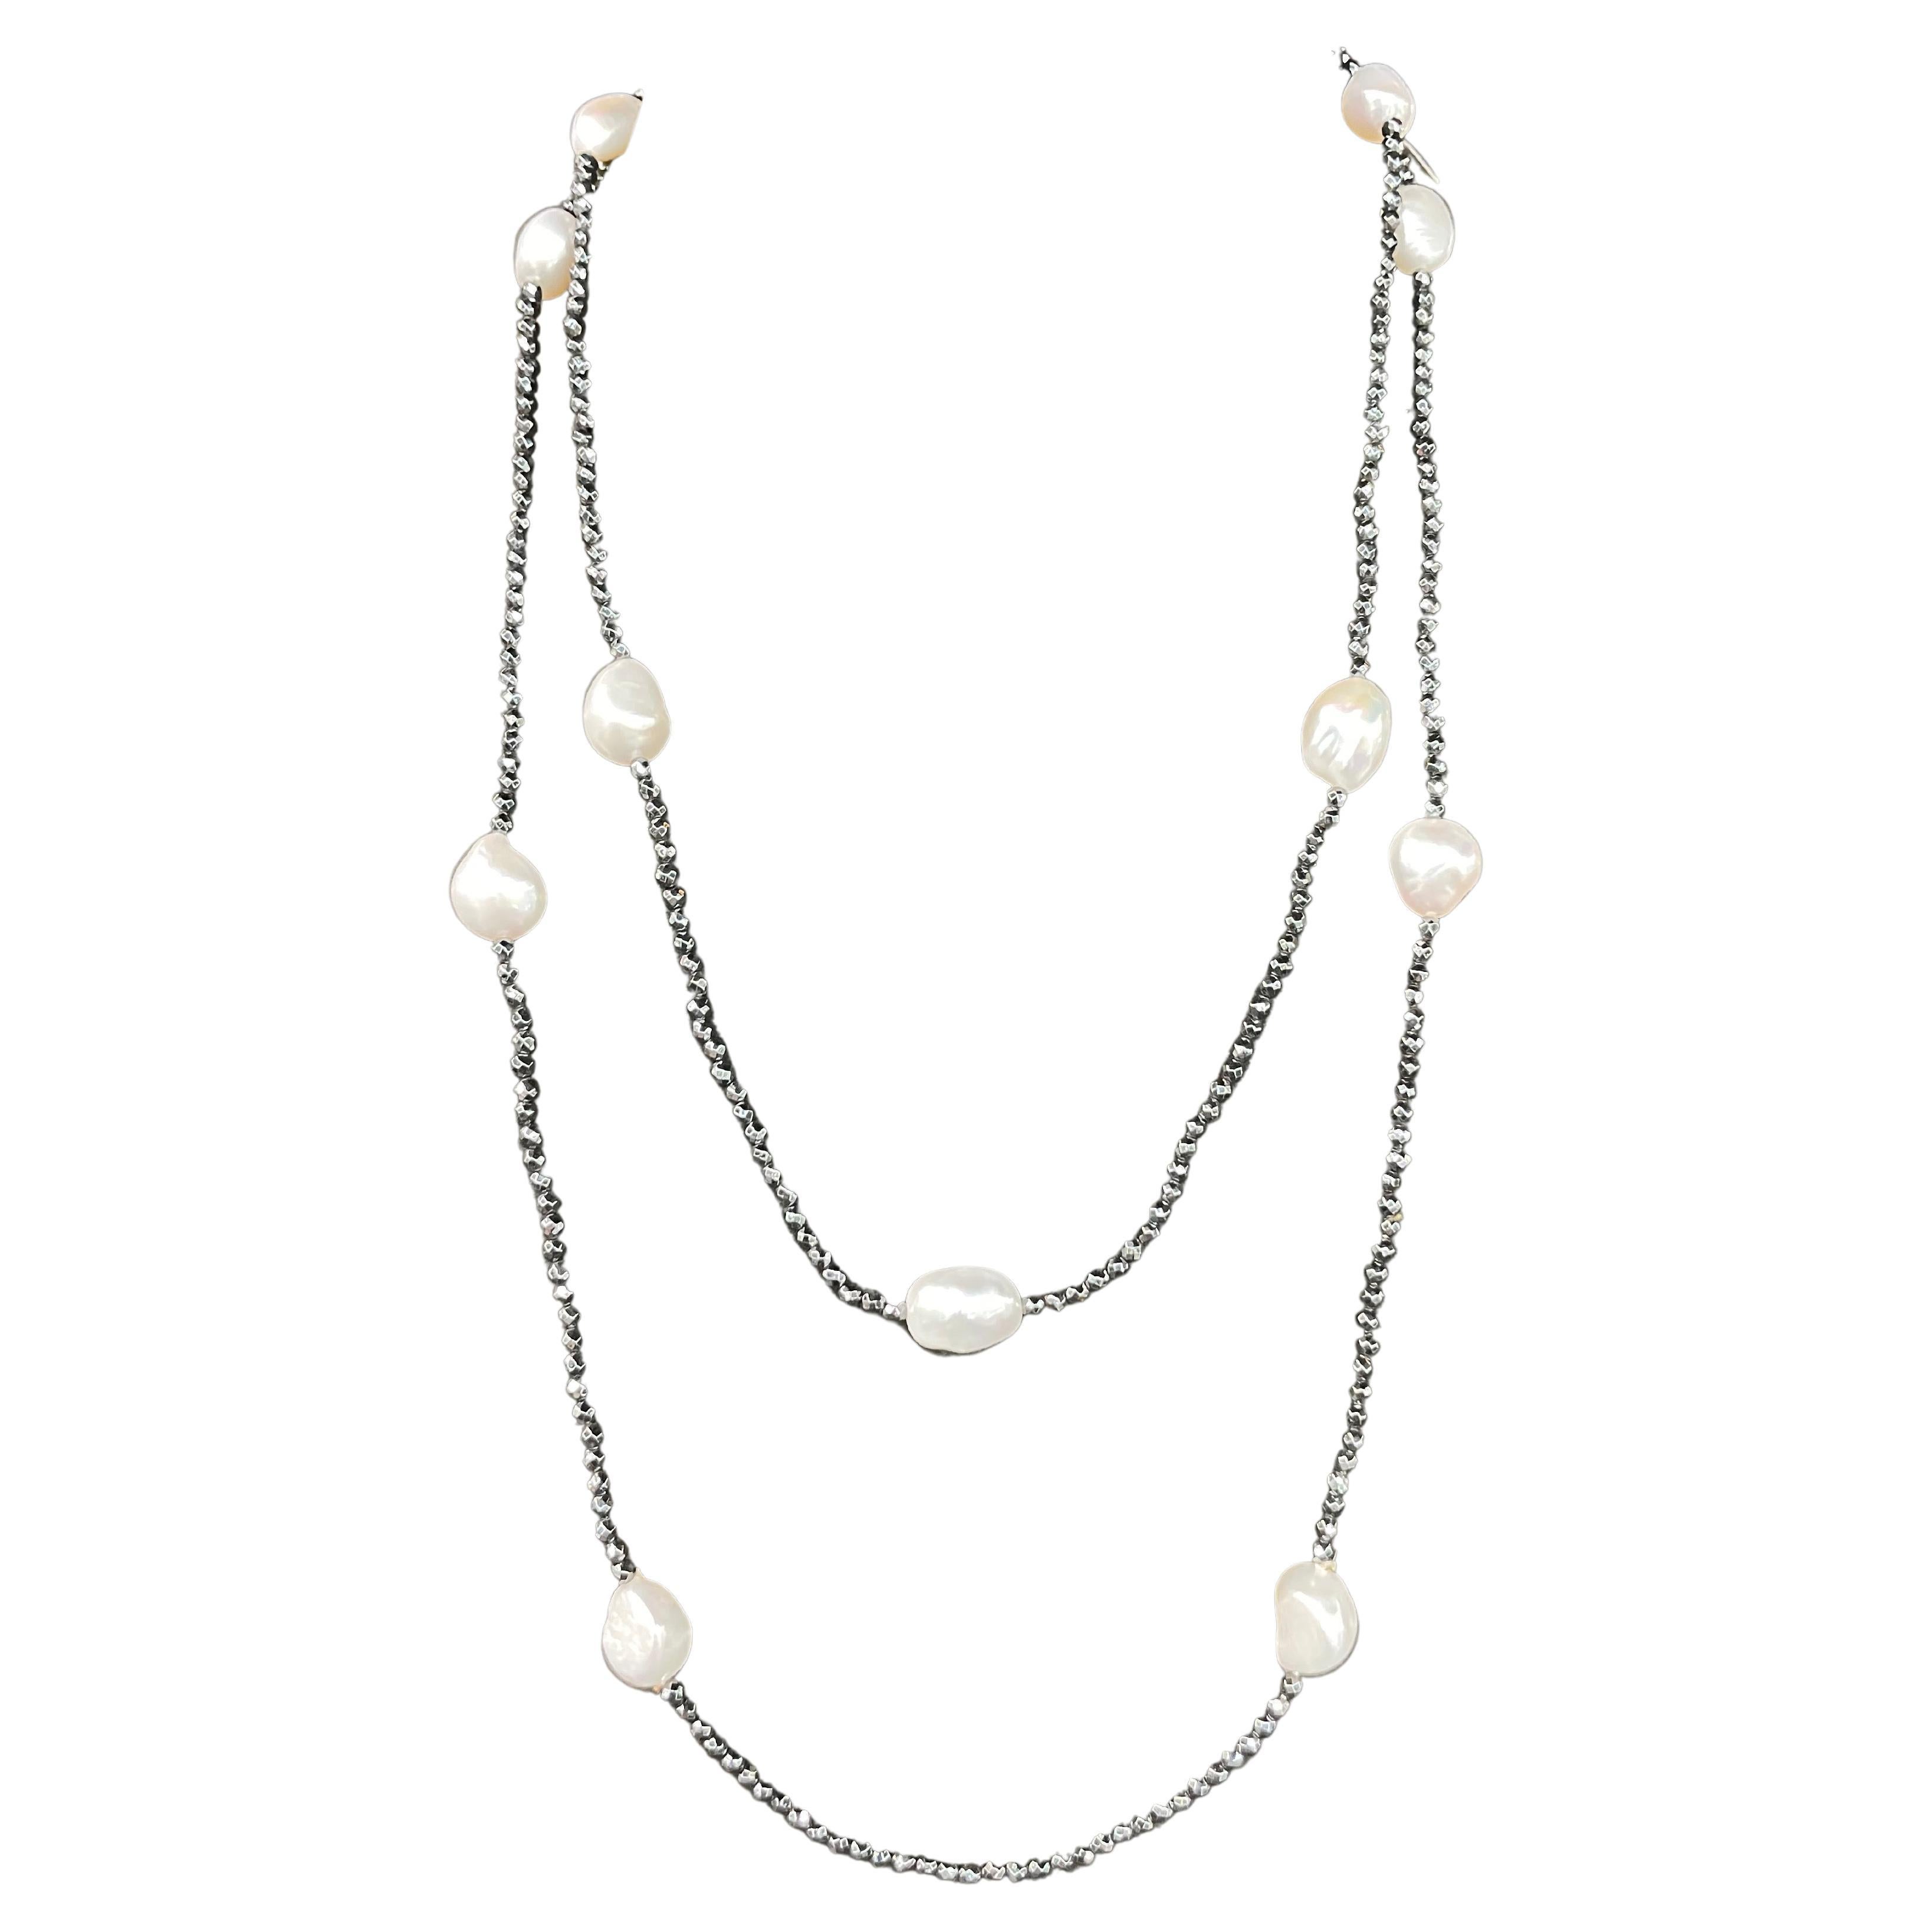 Strand of Hematite White Pearl Multi-Strand Necklace 50 Inches